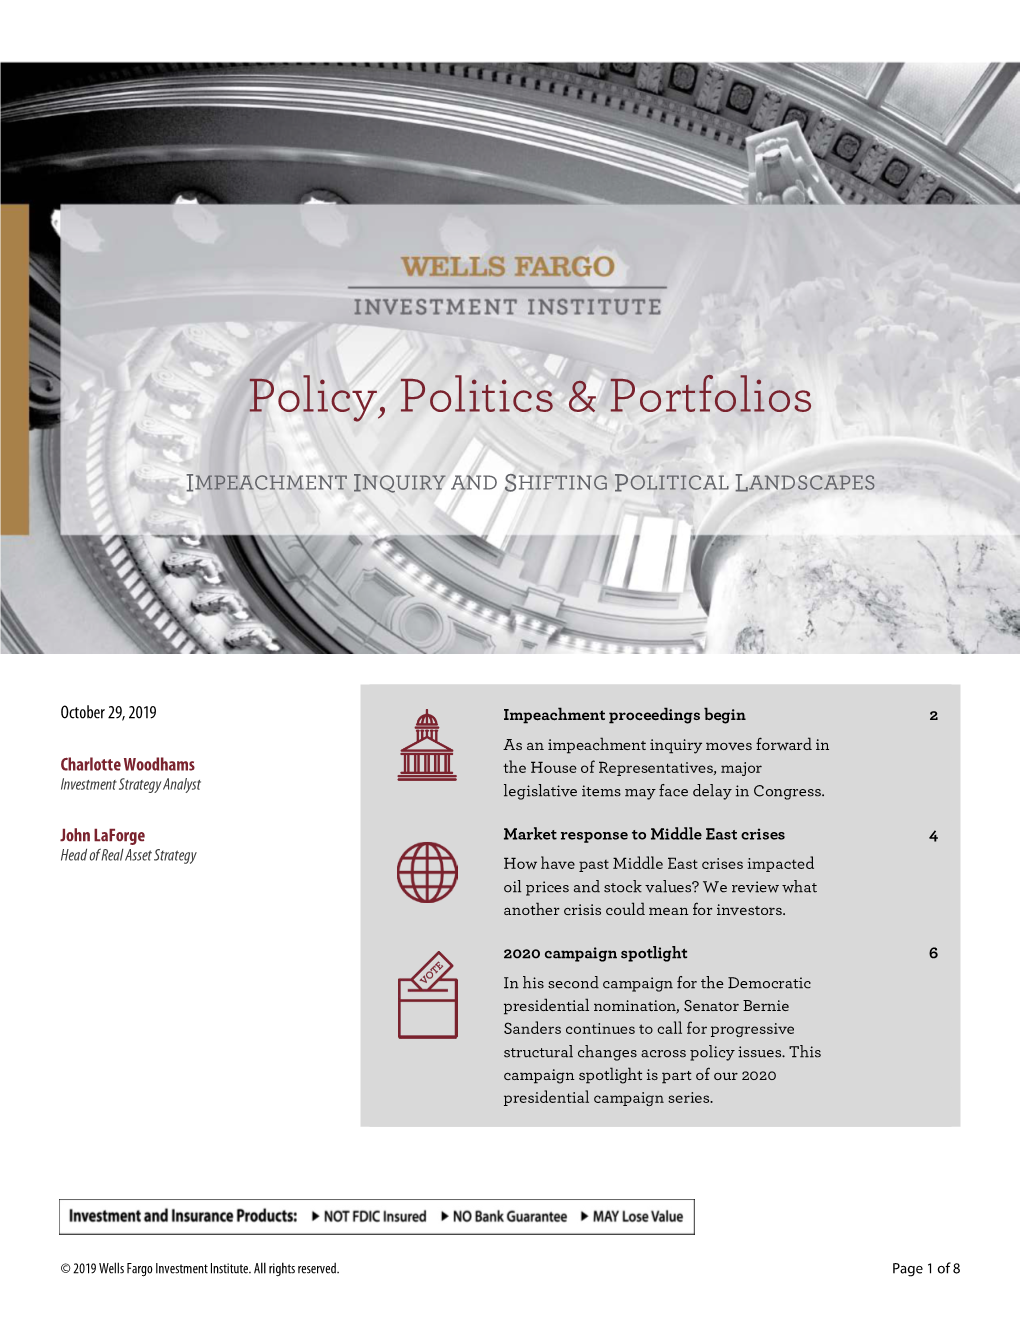 Policy, Politics & Portfolios Report